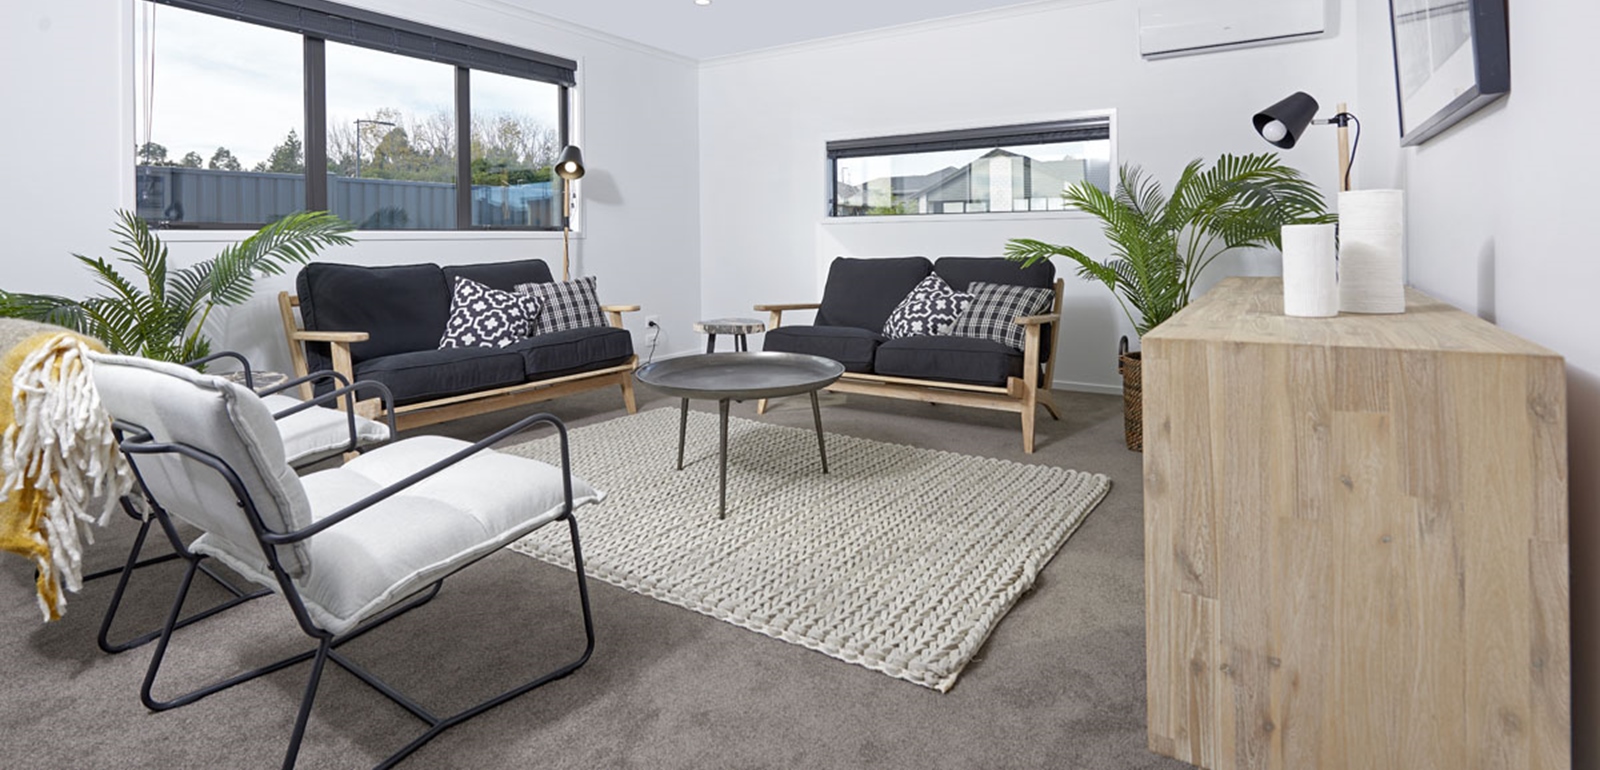 Separate living room floorplan design